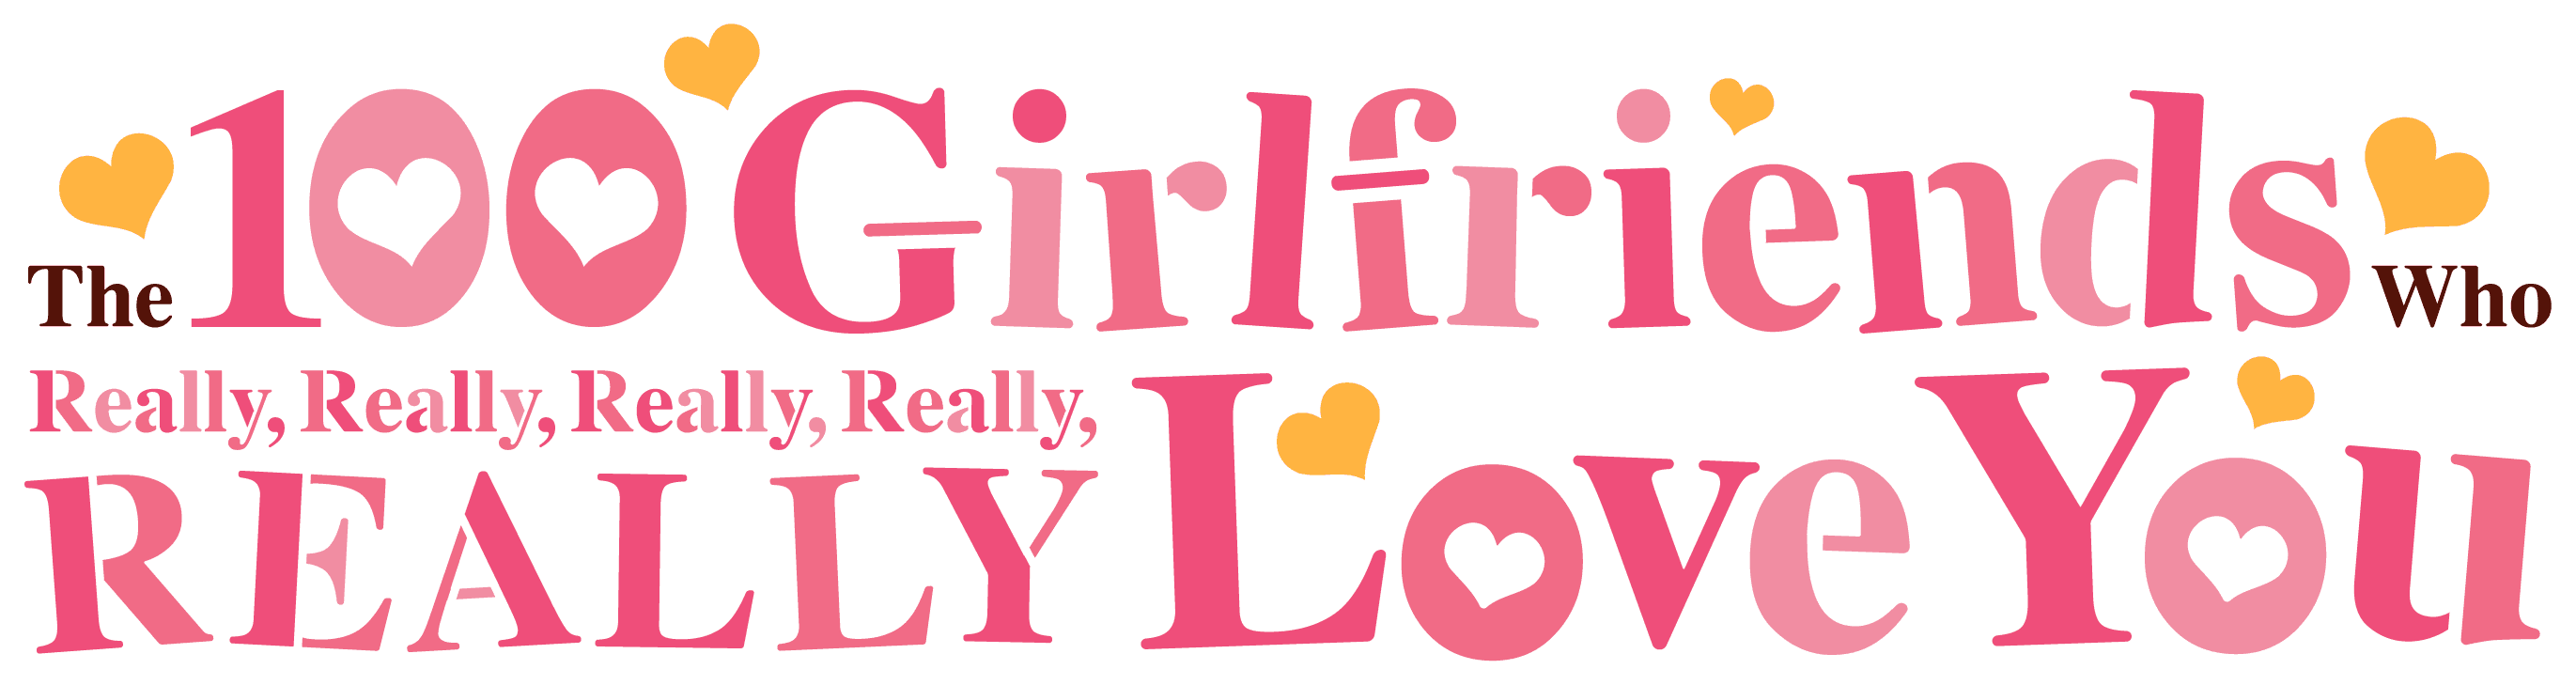 The 100 Girlfriends Who Really, Really, Really, Really, REALLY Love You logo